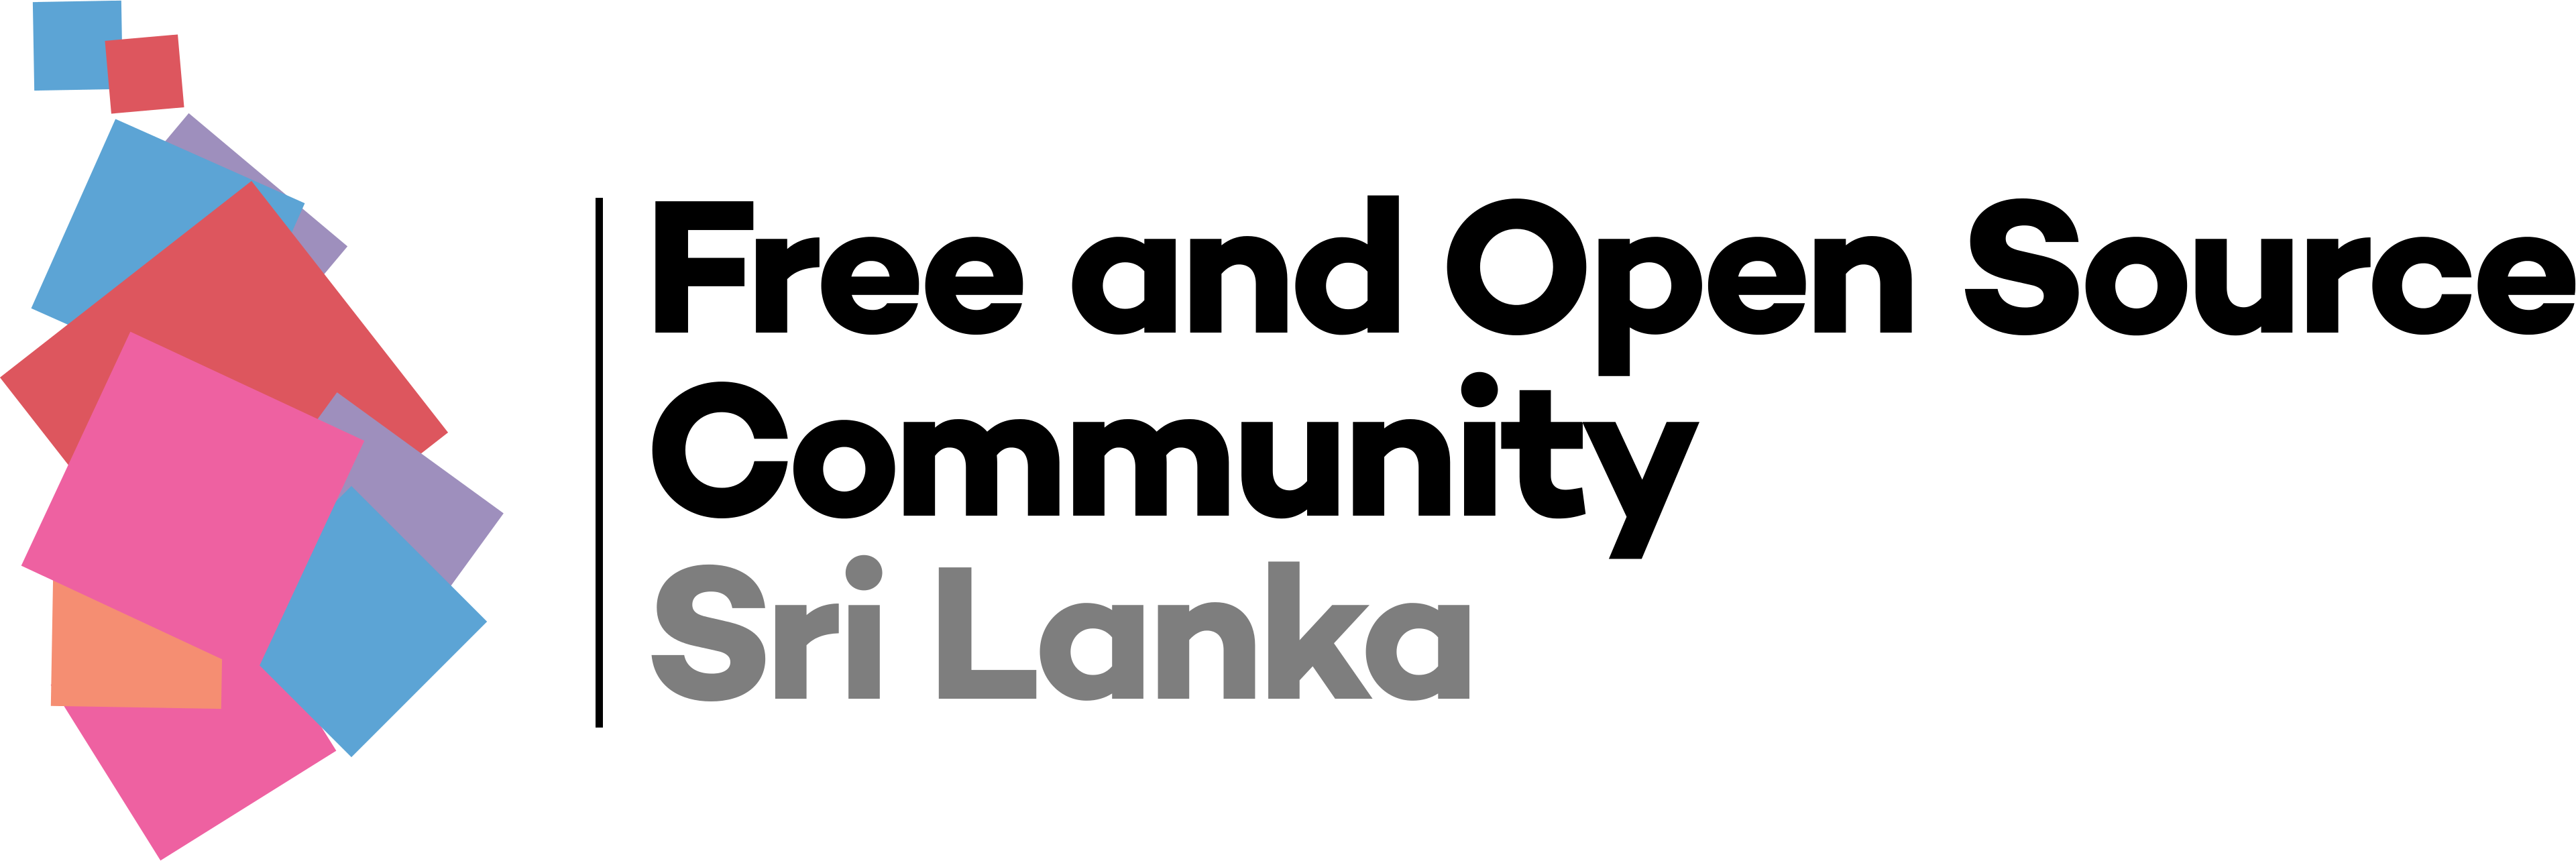 Blog – FOSS Sri Lanka